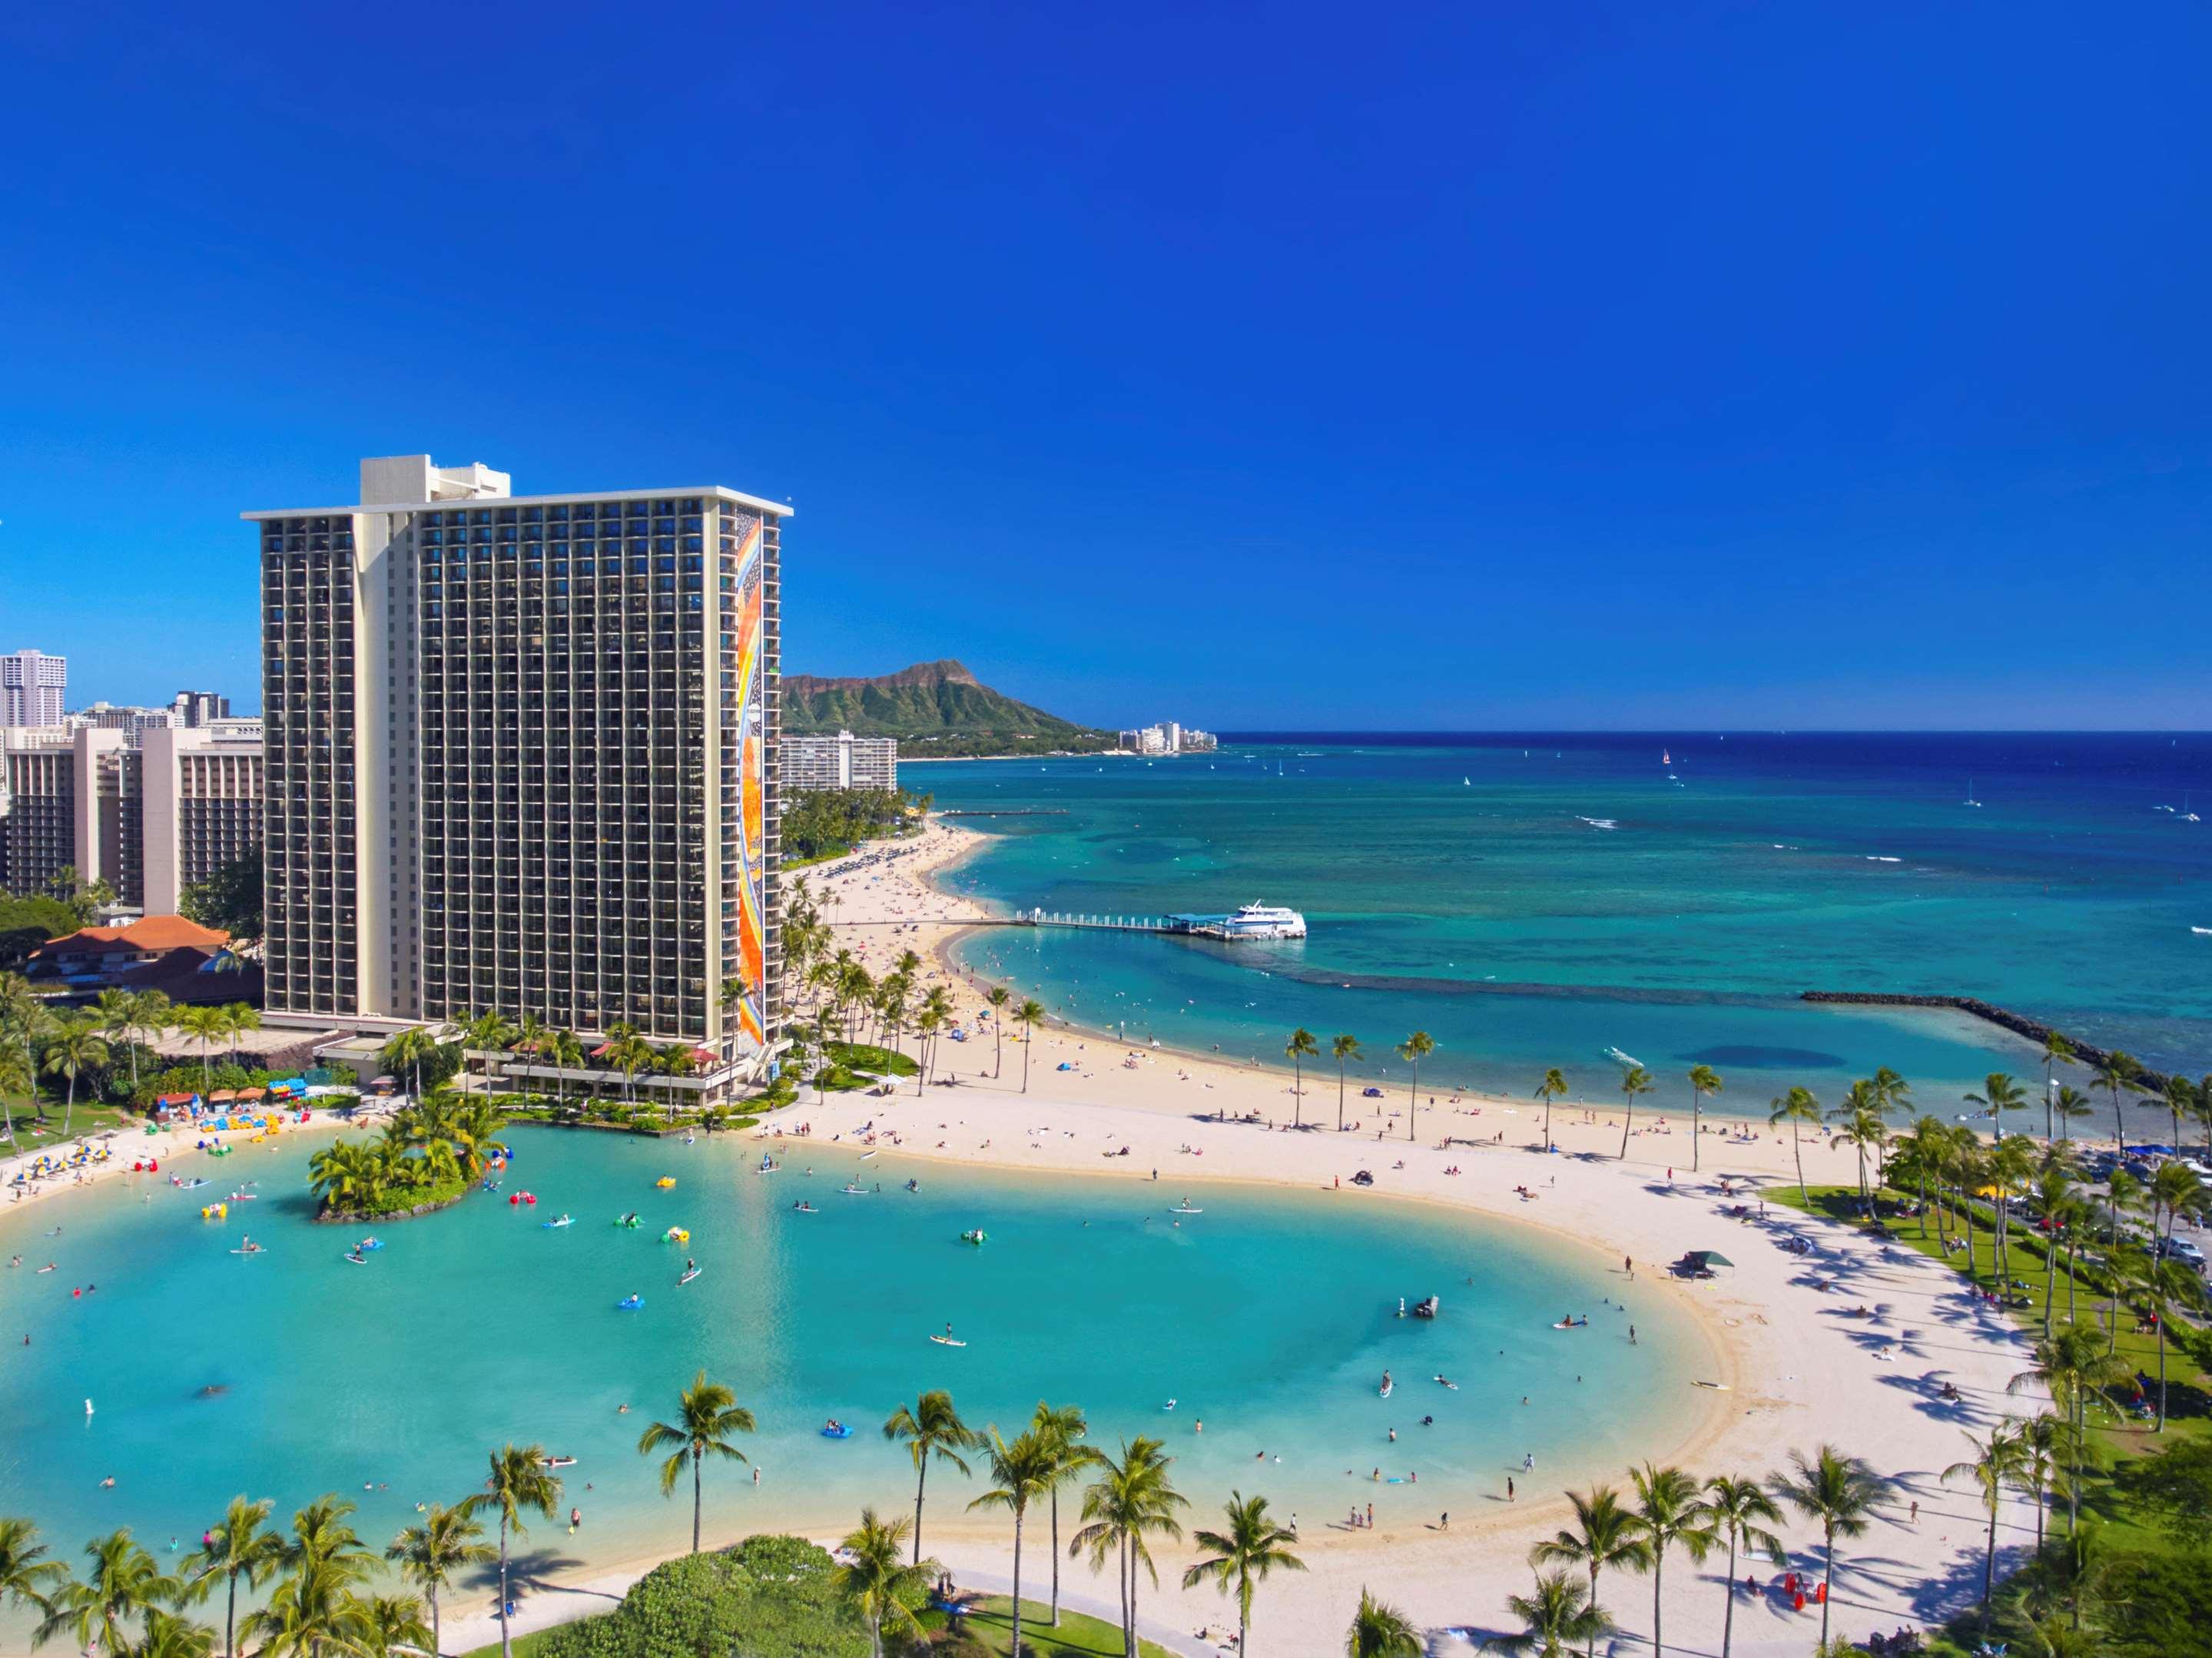 How to get to Hilton Hawaiian Village Waikiki Beach Resort